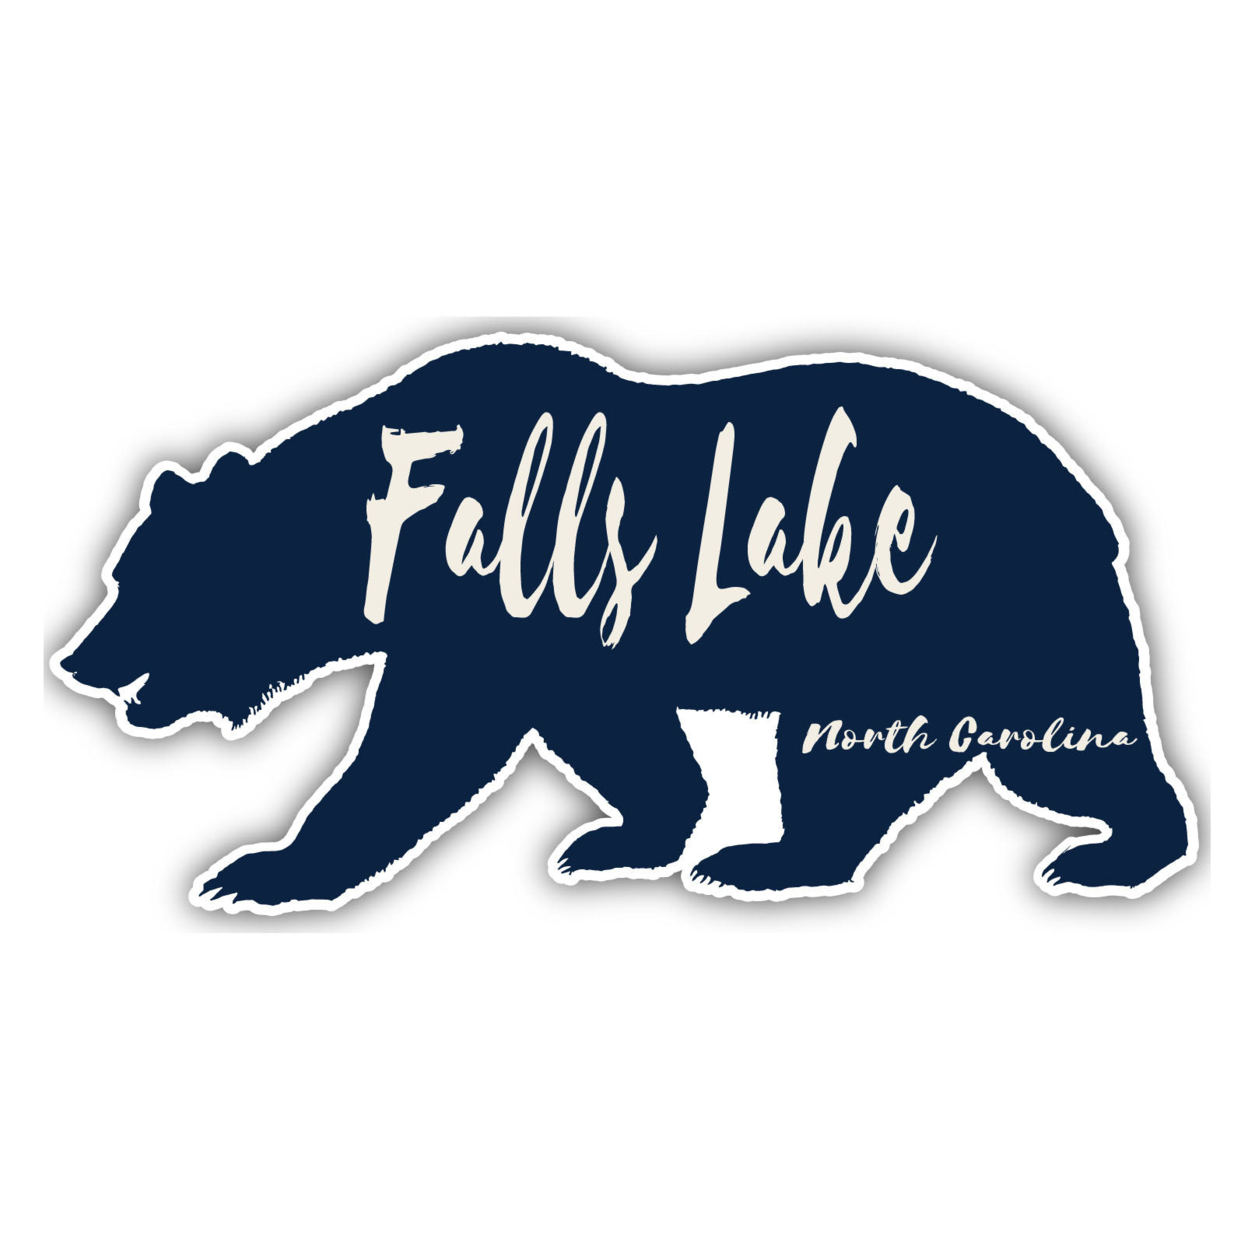 Falls Lake North Carolina Souvenir Decorative Stickers (Choose Theme And Size) - 4-Pack, 4-Inch, Bear